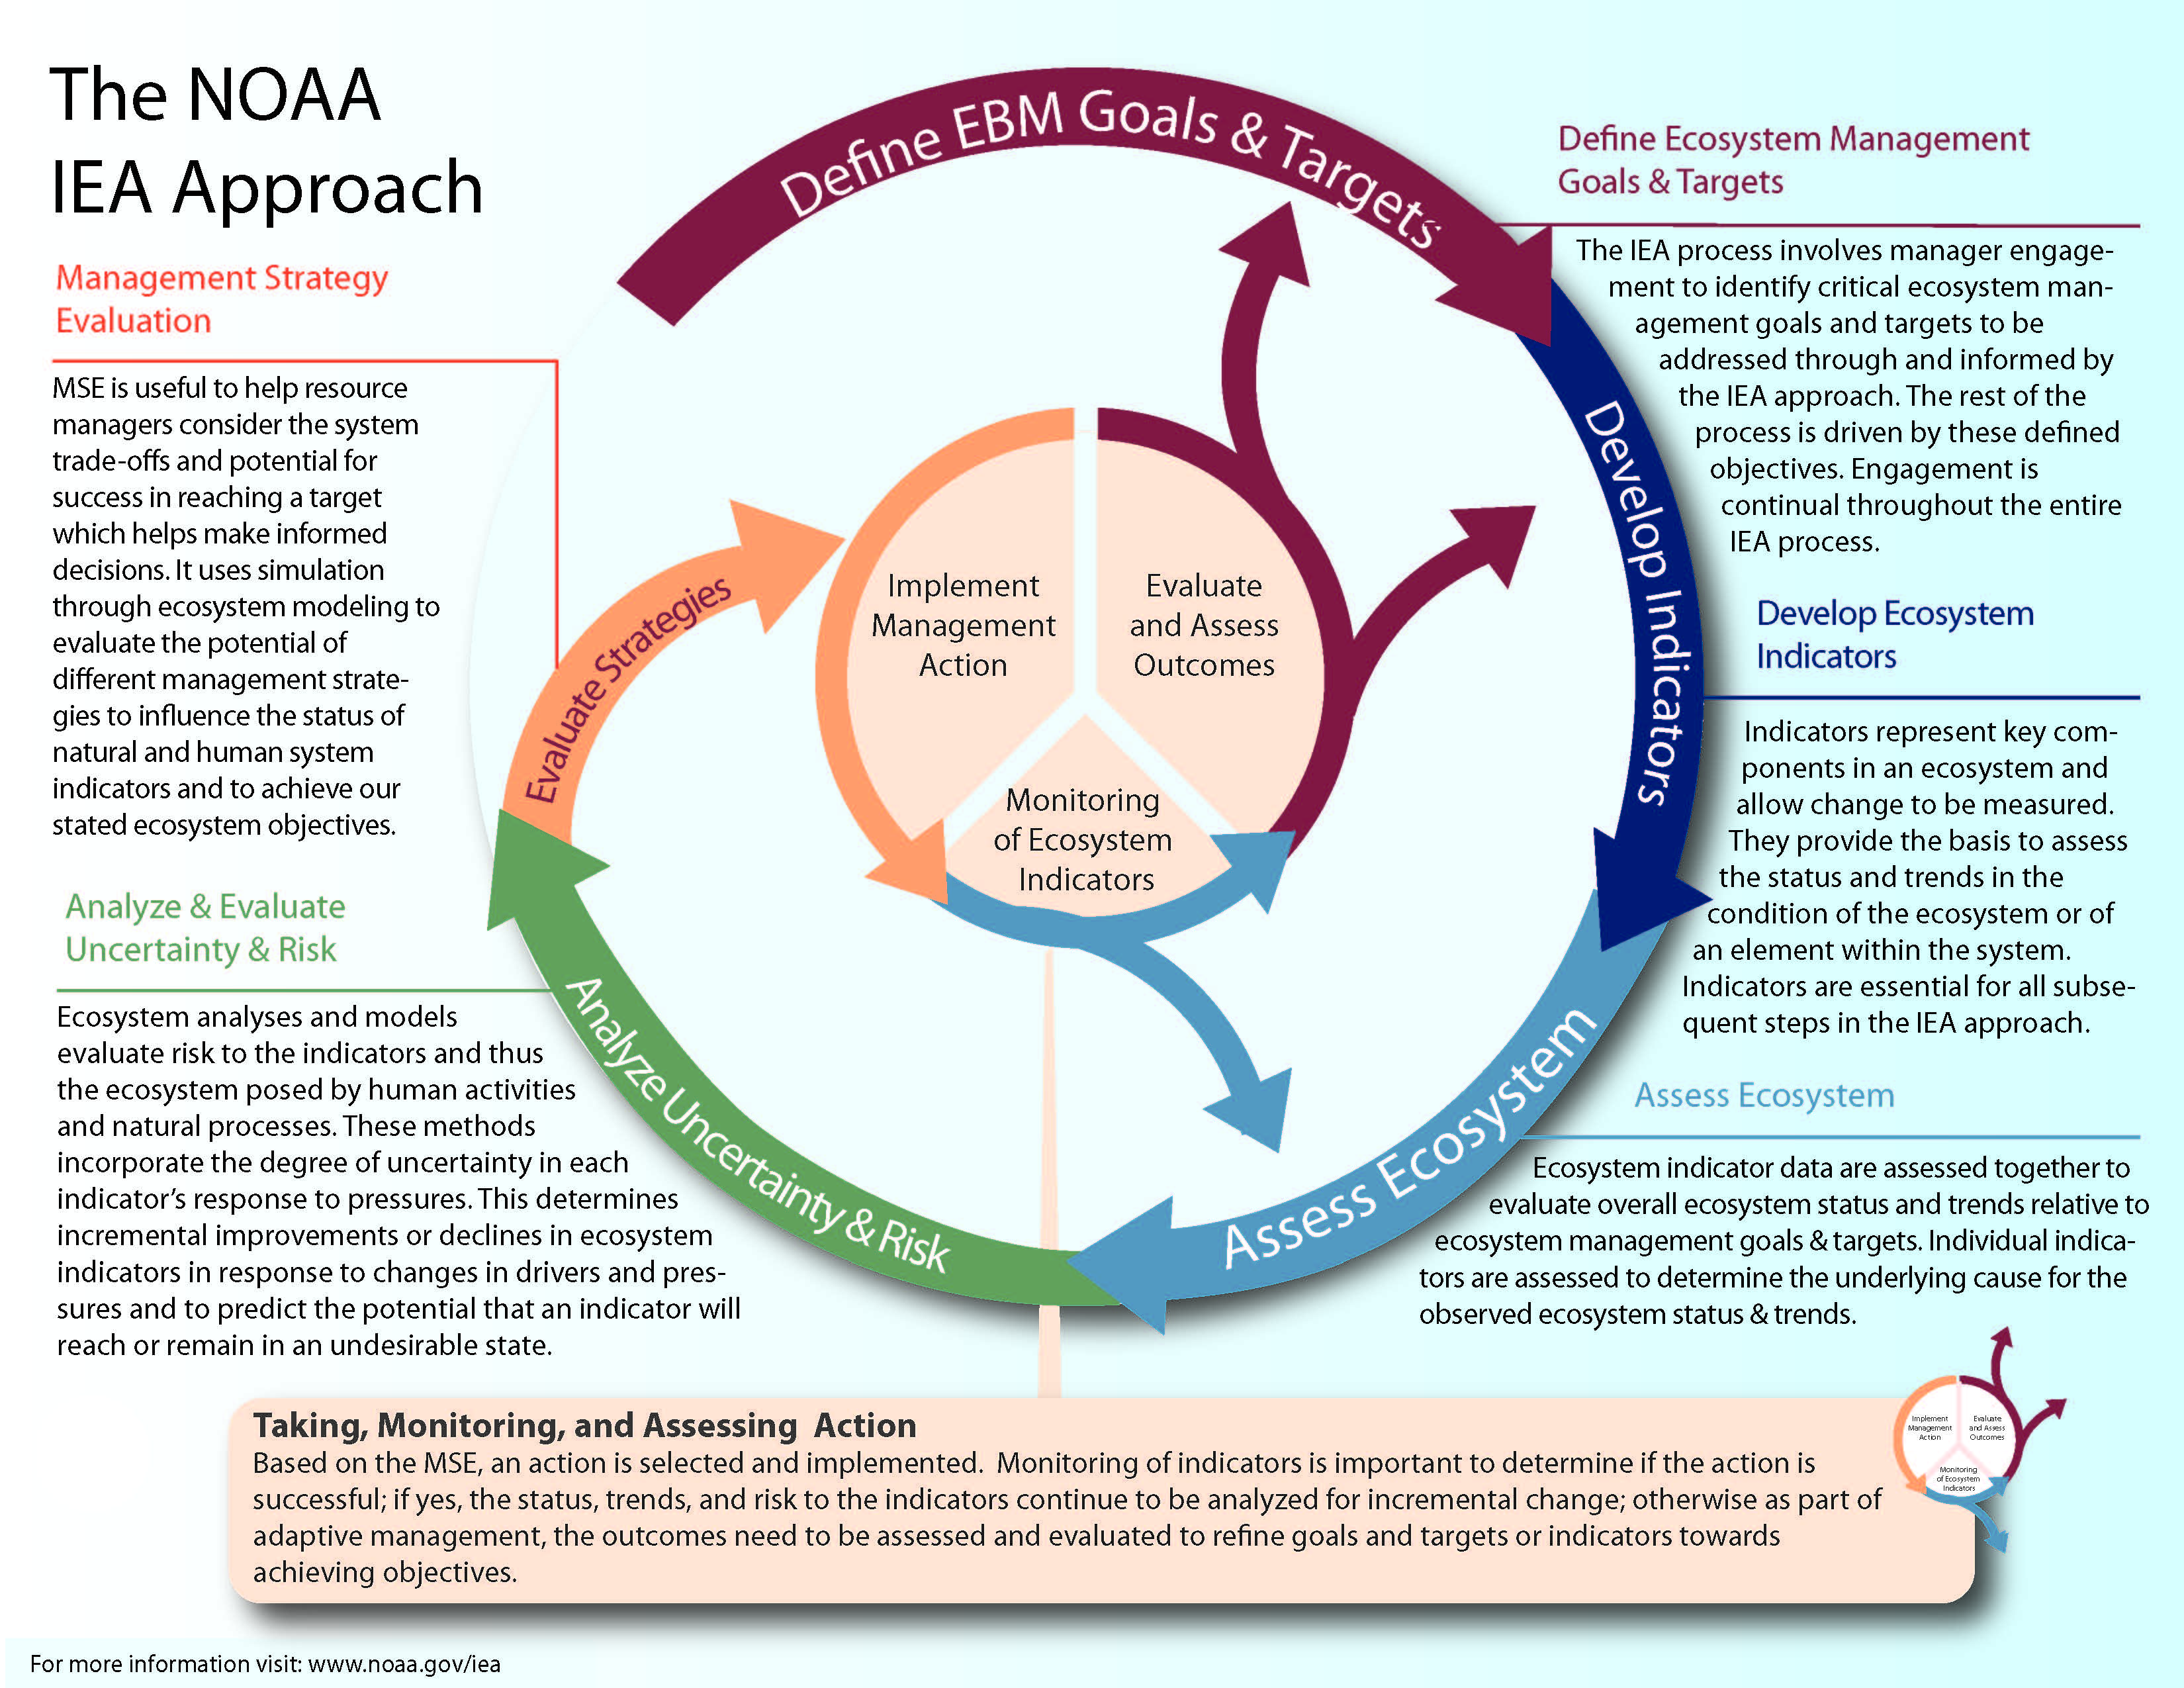 NOAA's IEA approach with a description of each step